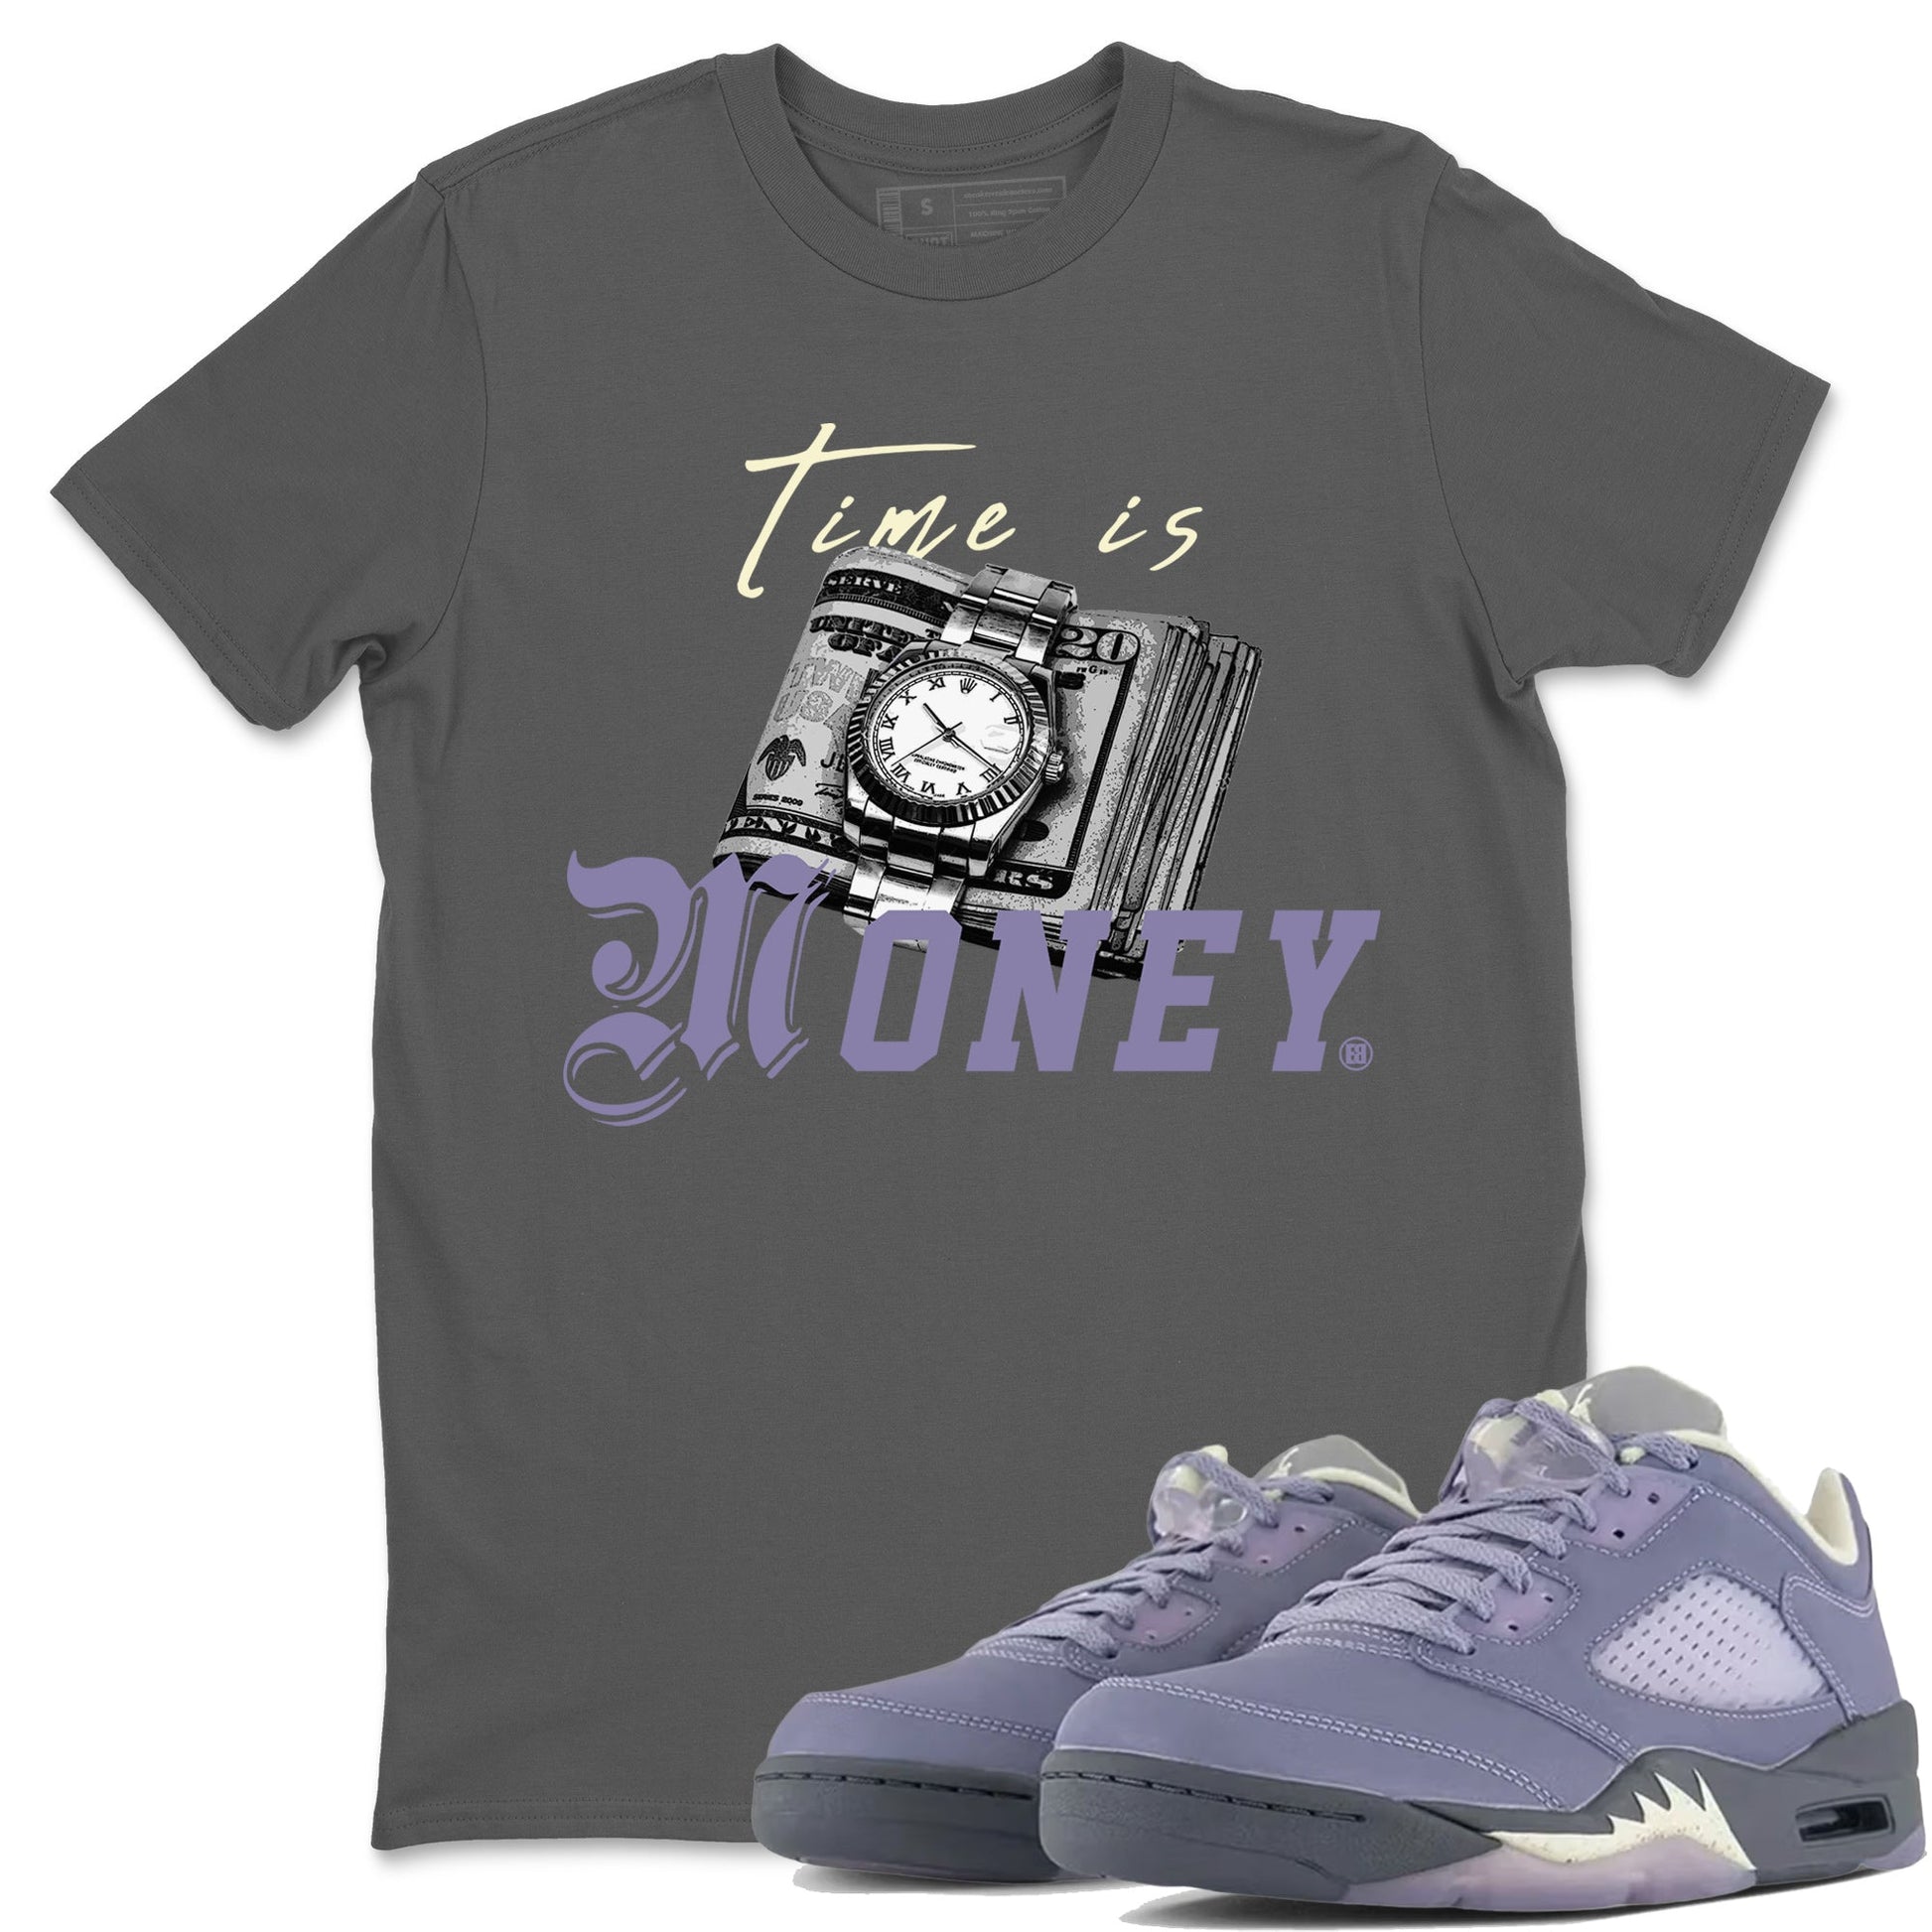 5s Indigo Haze Sneaker Match Tees Time Is Money Sneaker T-Shirt Air Jordan 5 Indigo Haze Sneaker Release Tees Unisex Shirts Cool Grey 1